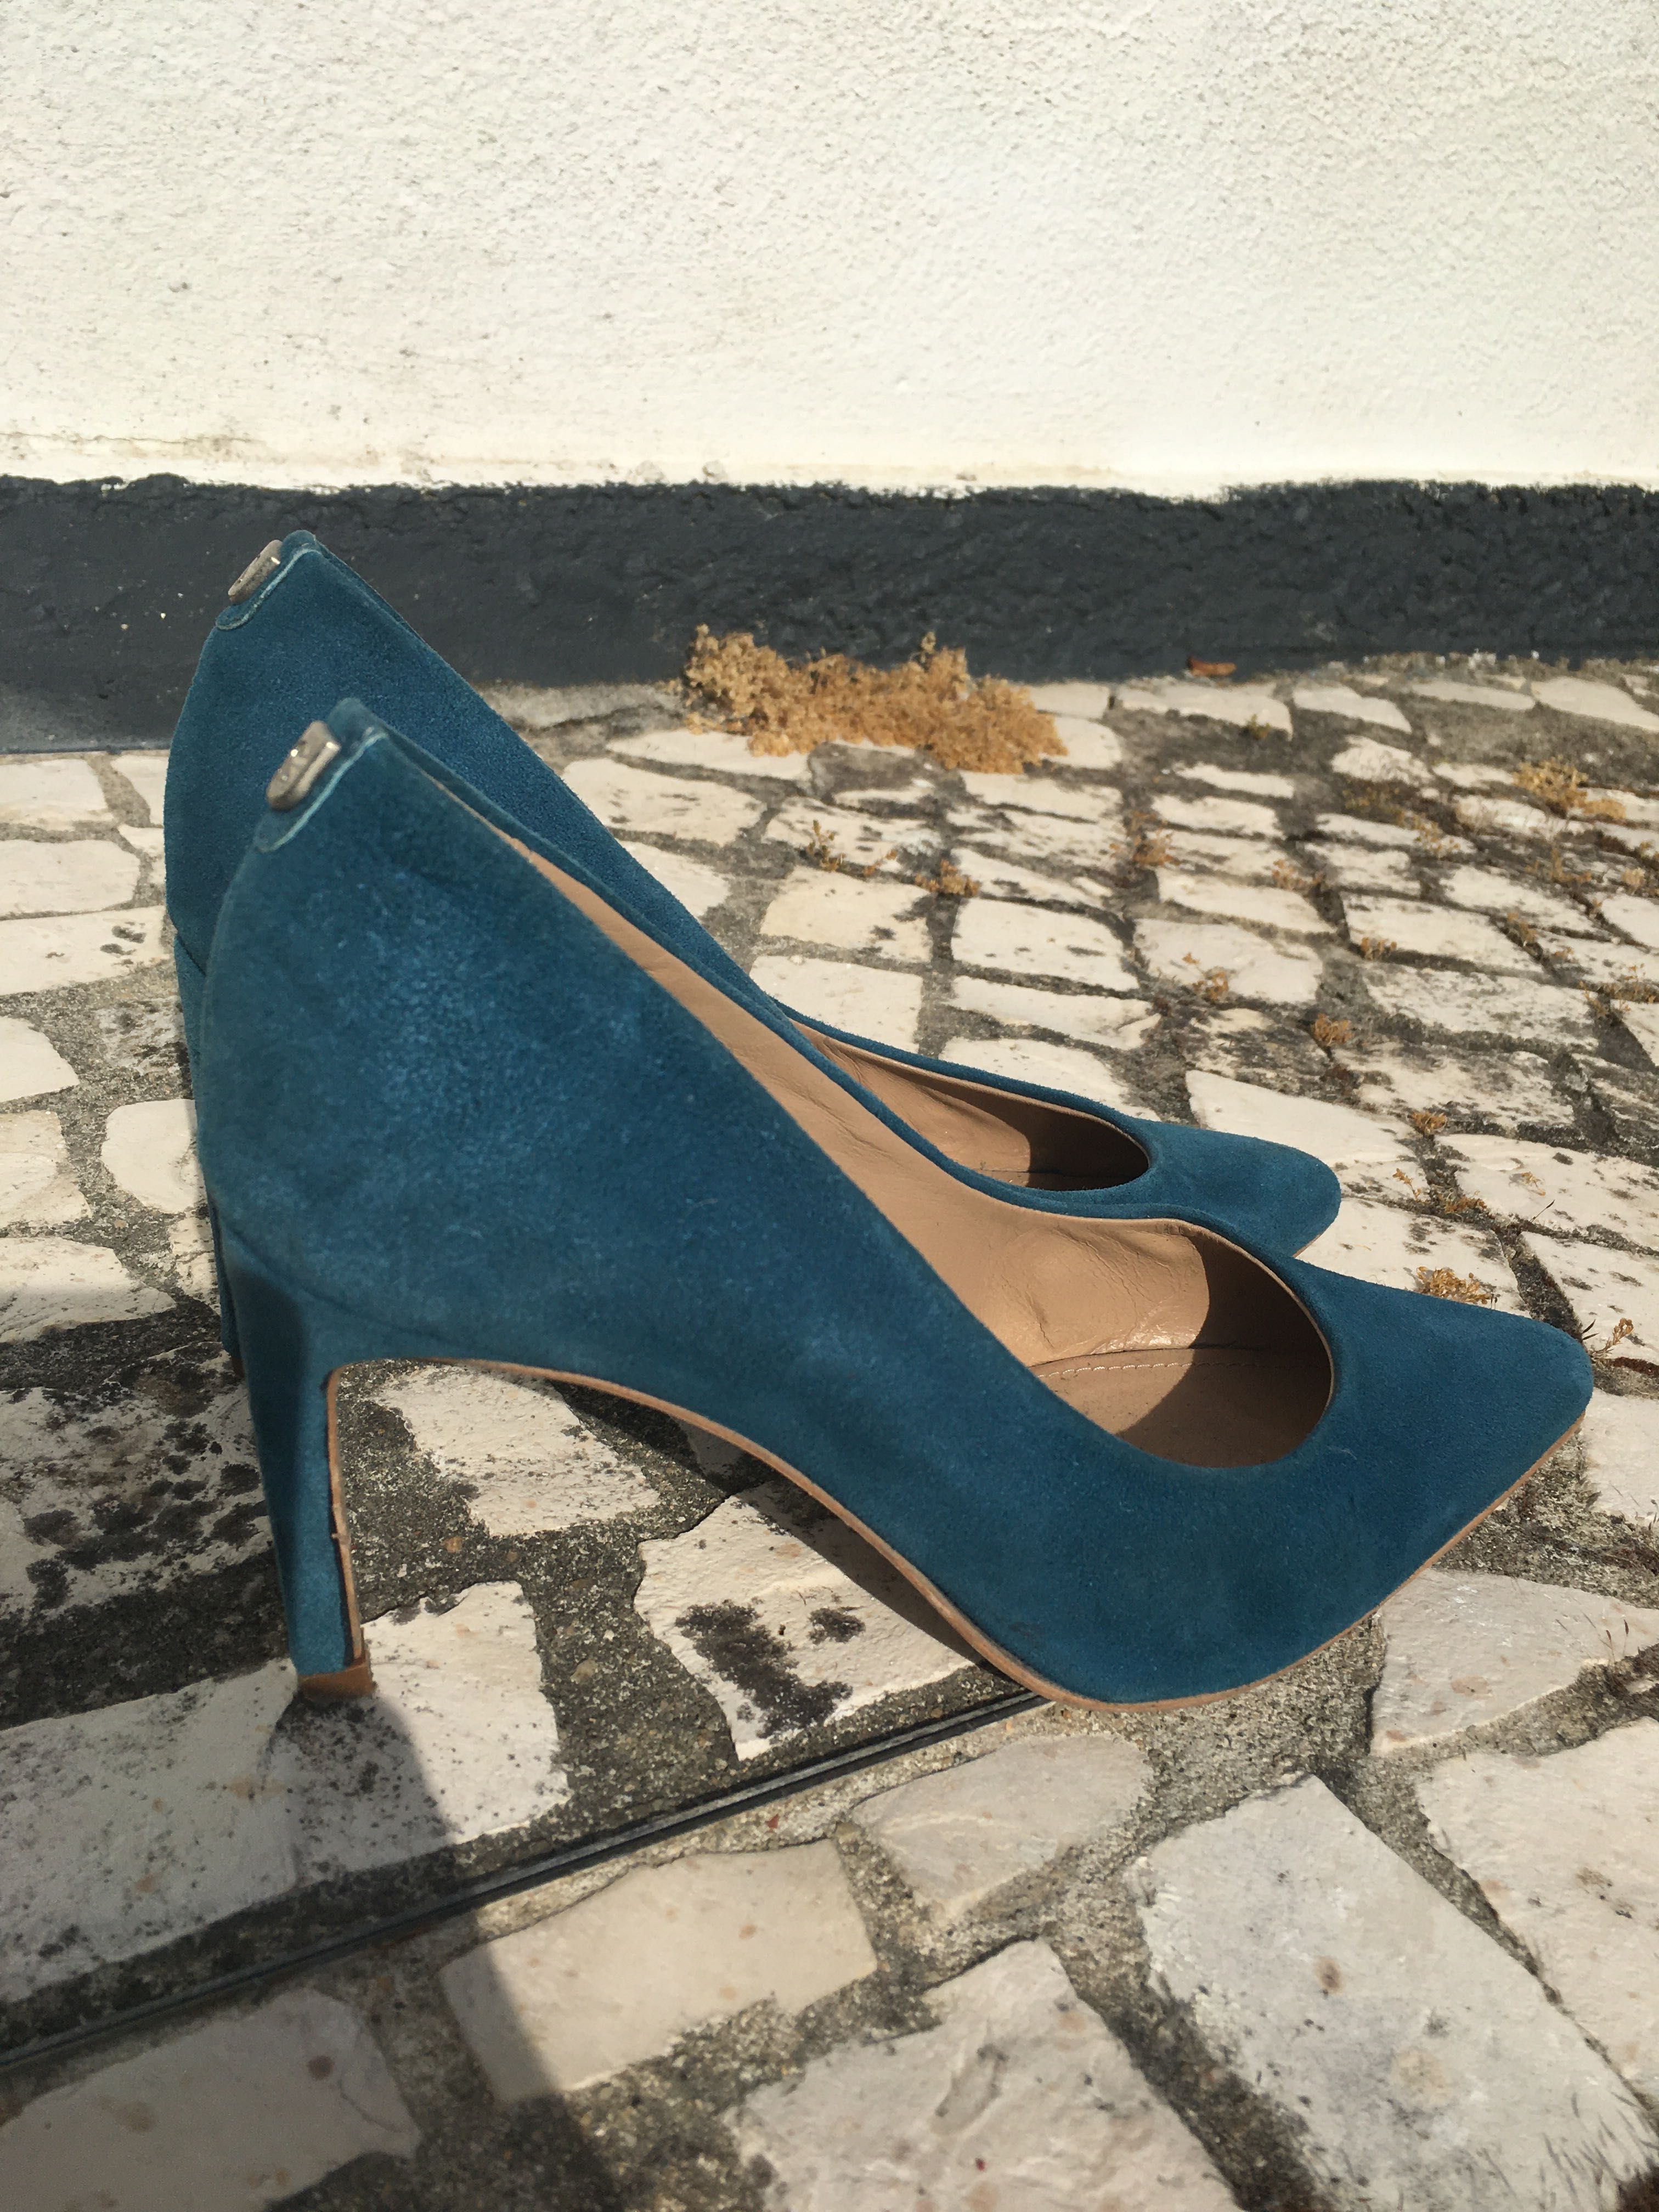 Sapatos SALSA, azul petróleo